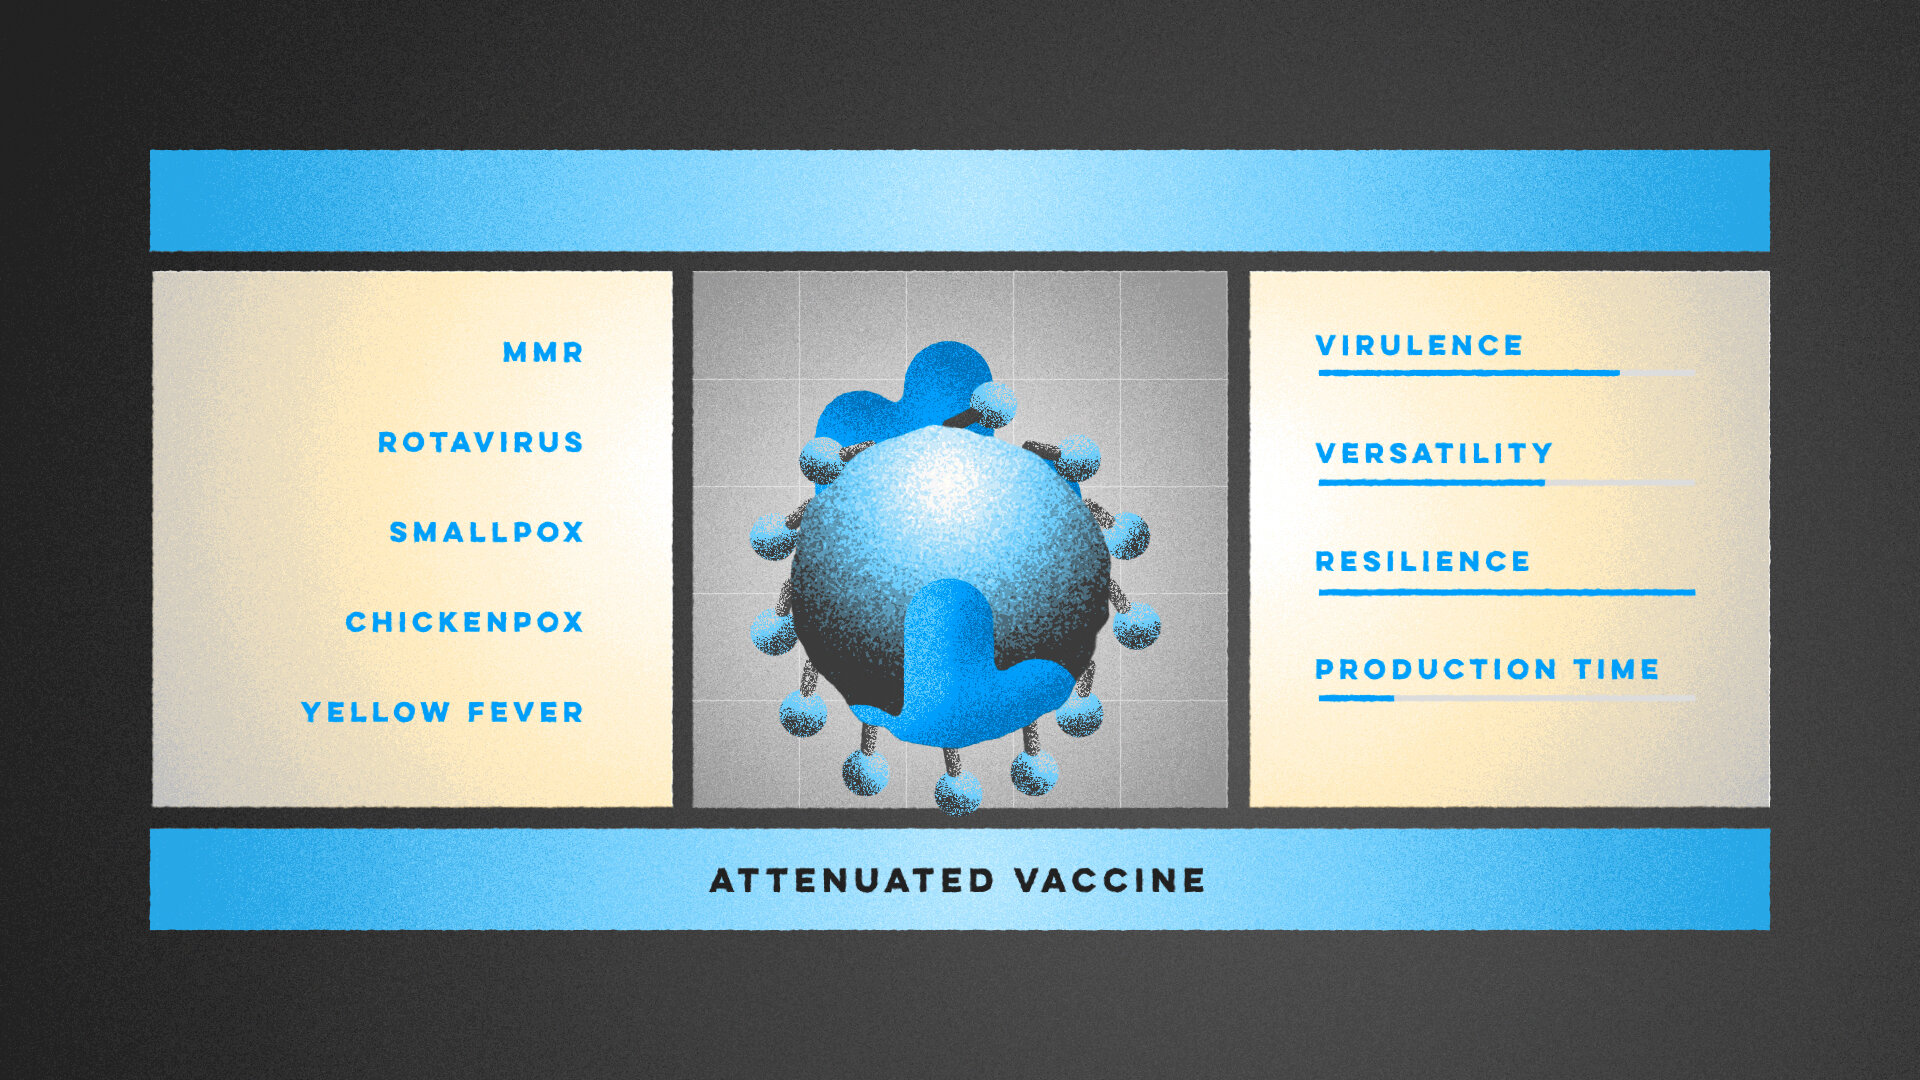 TED_Vaccines_13_AttenuatedVaccine.jpg